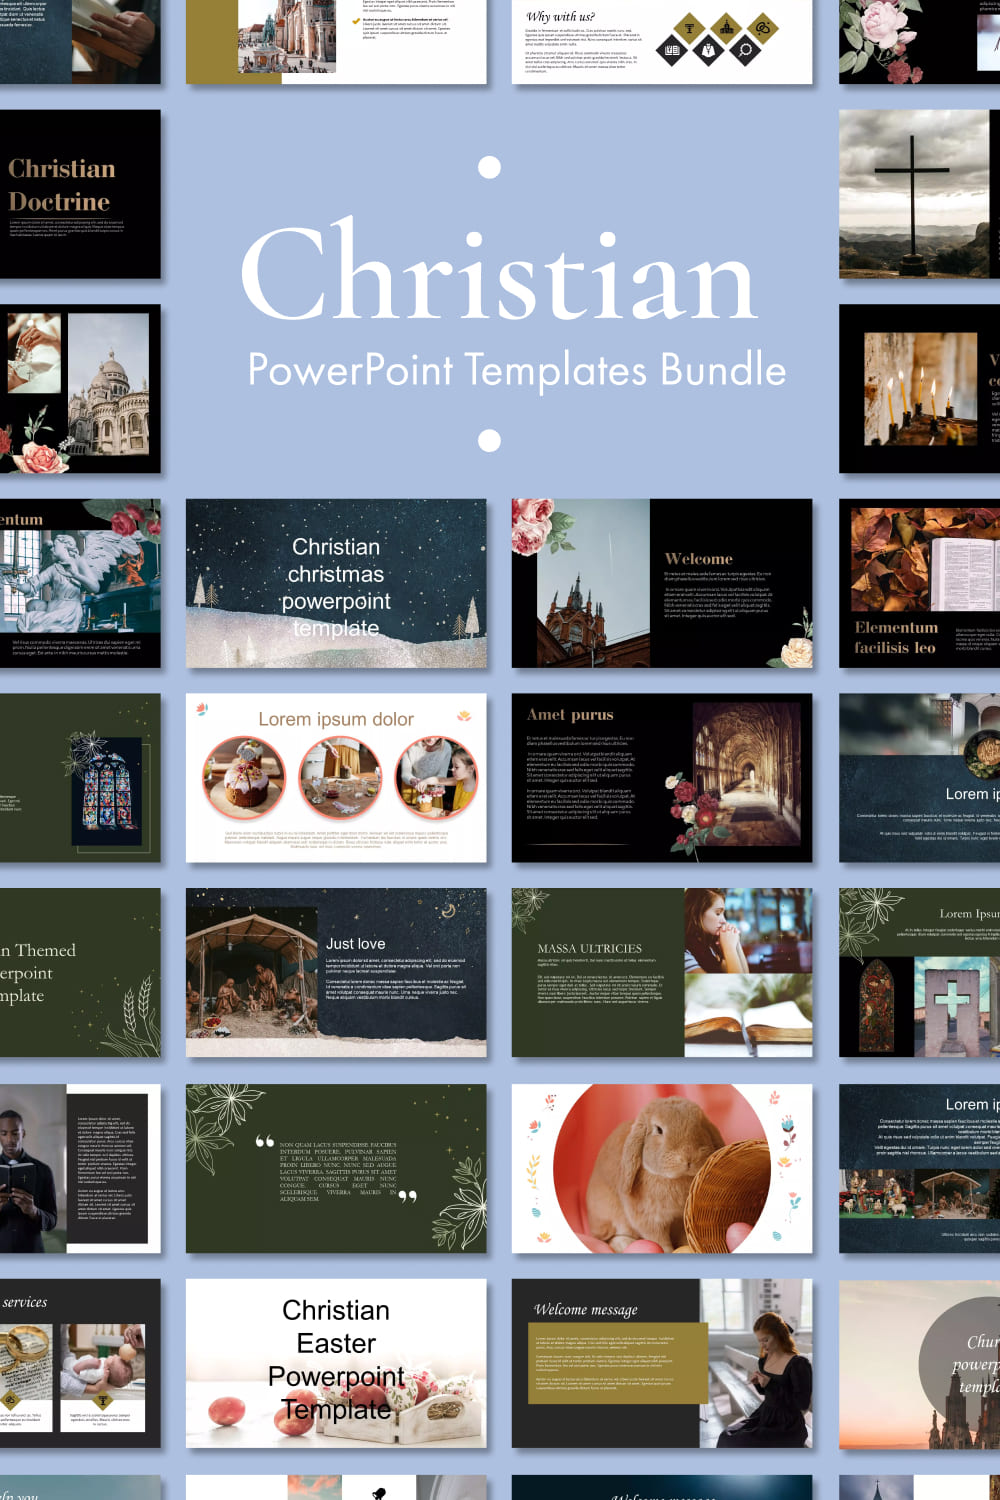 Christian powerpoint templates bundle images of pinterest.